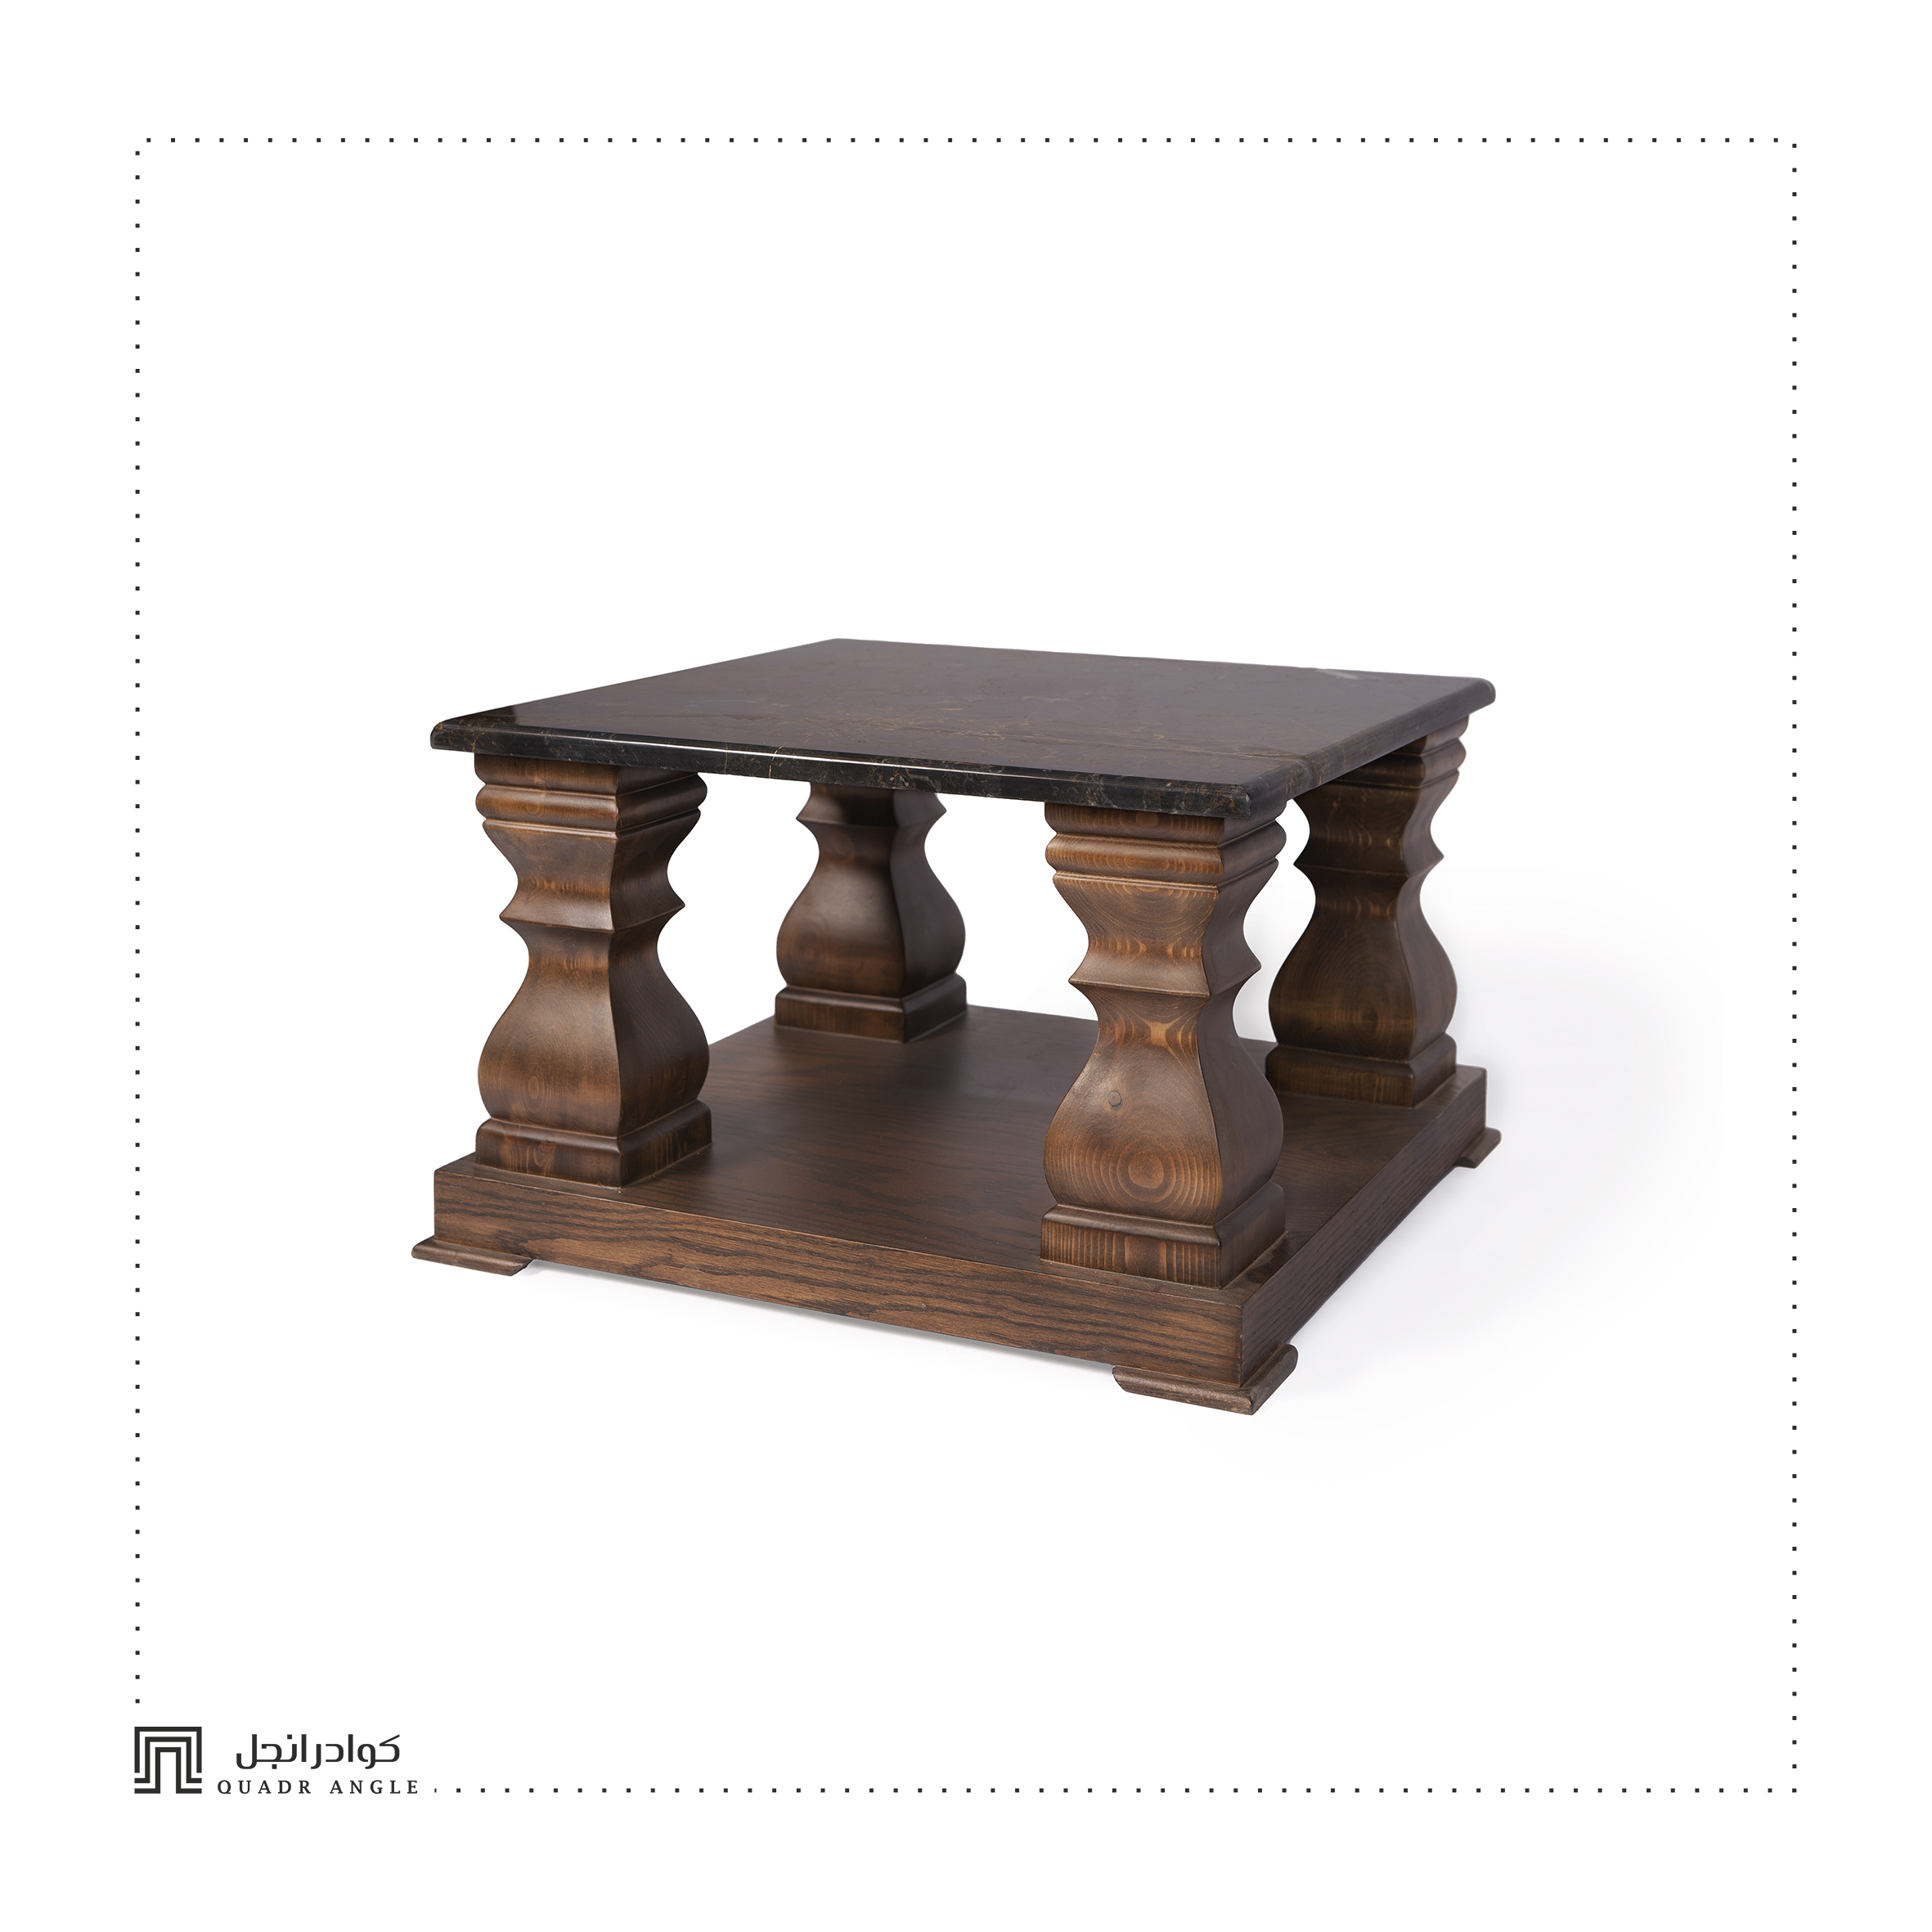 Rectangular wooden side table